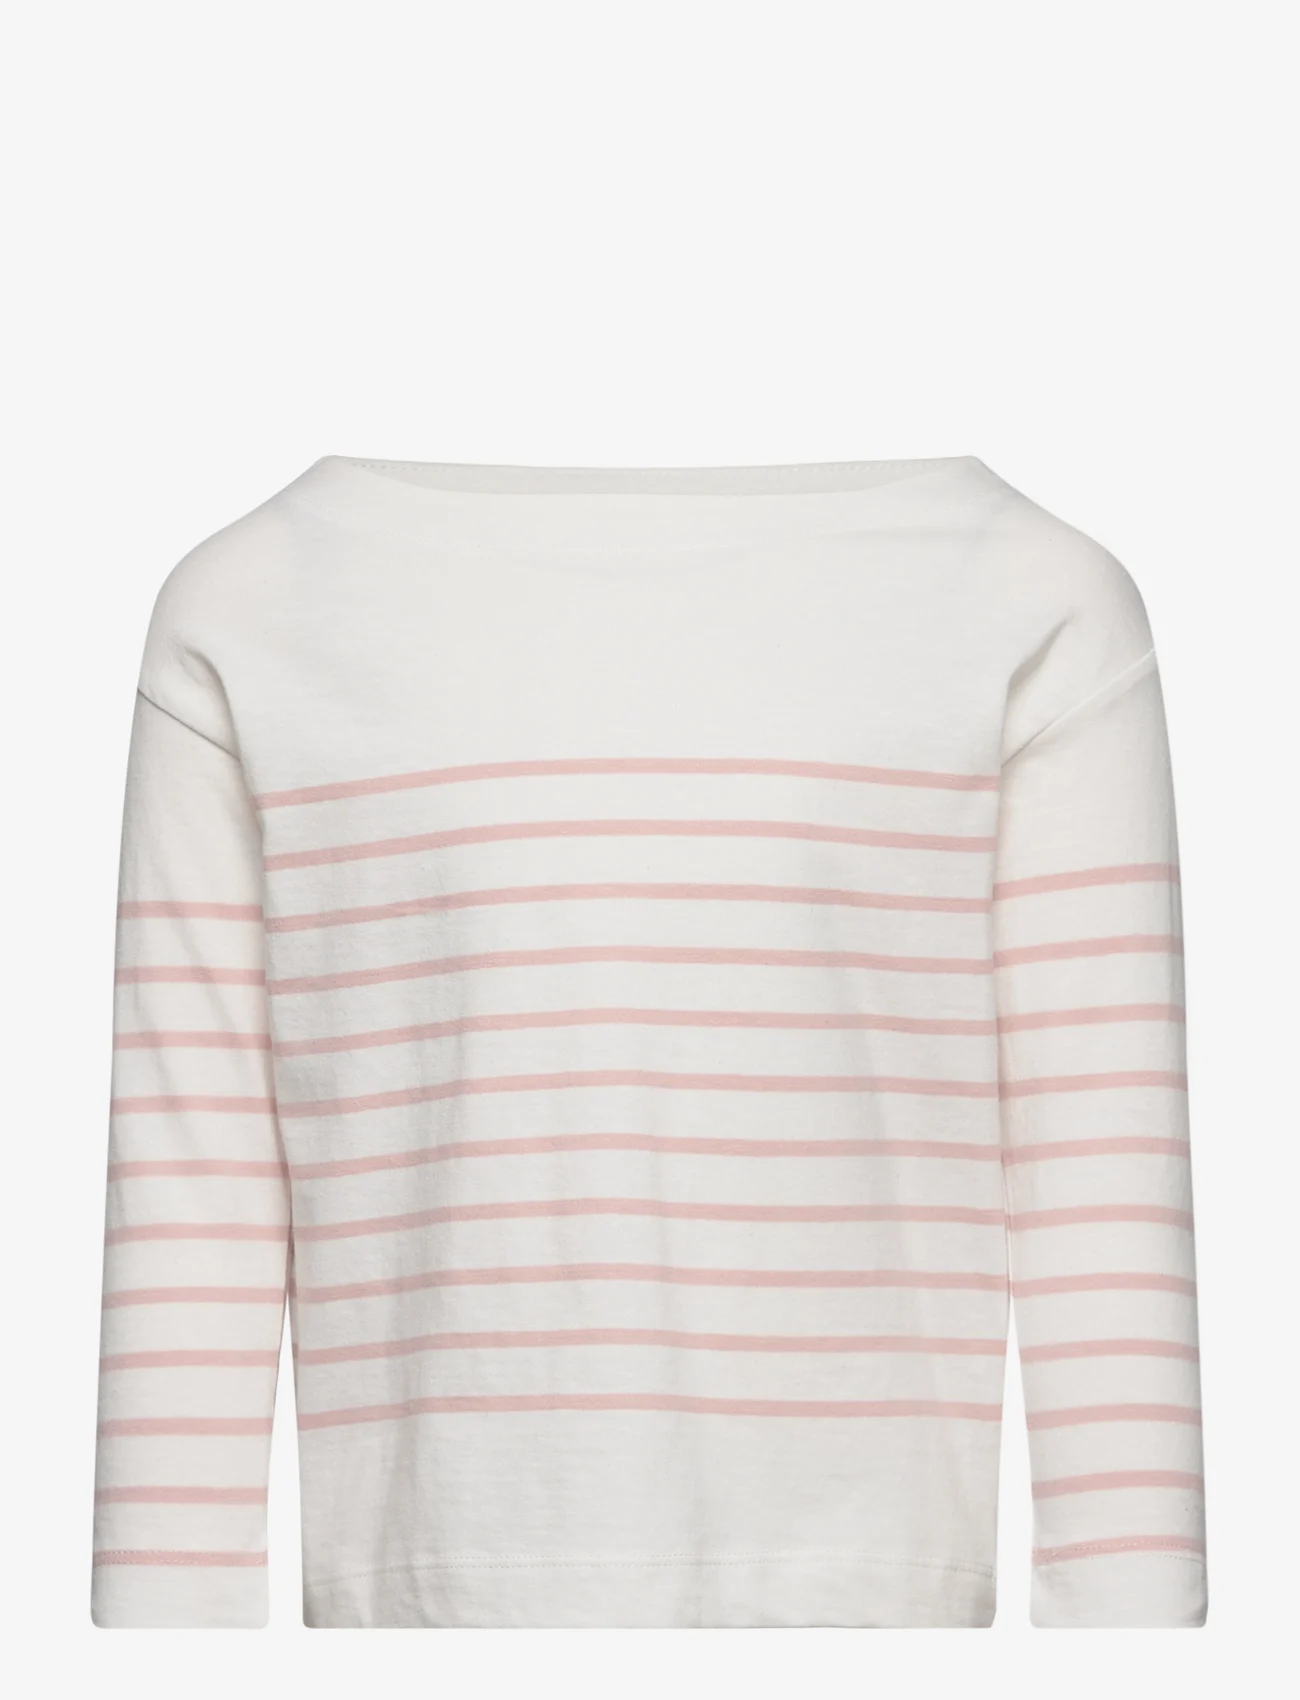 Mango - Striped long sleeves t-shirt - pitkähihaiset t-paidat - pink - 0